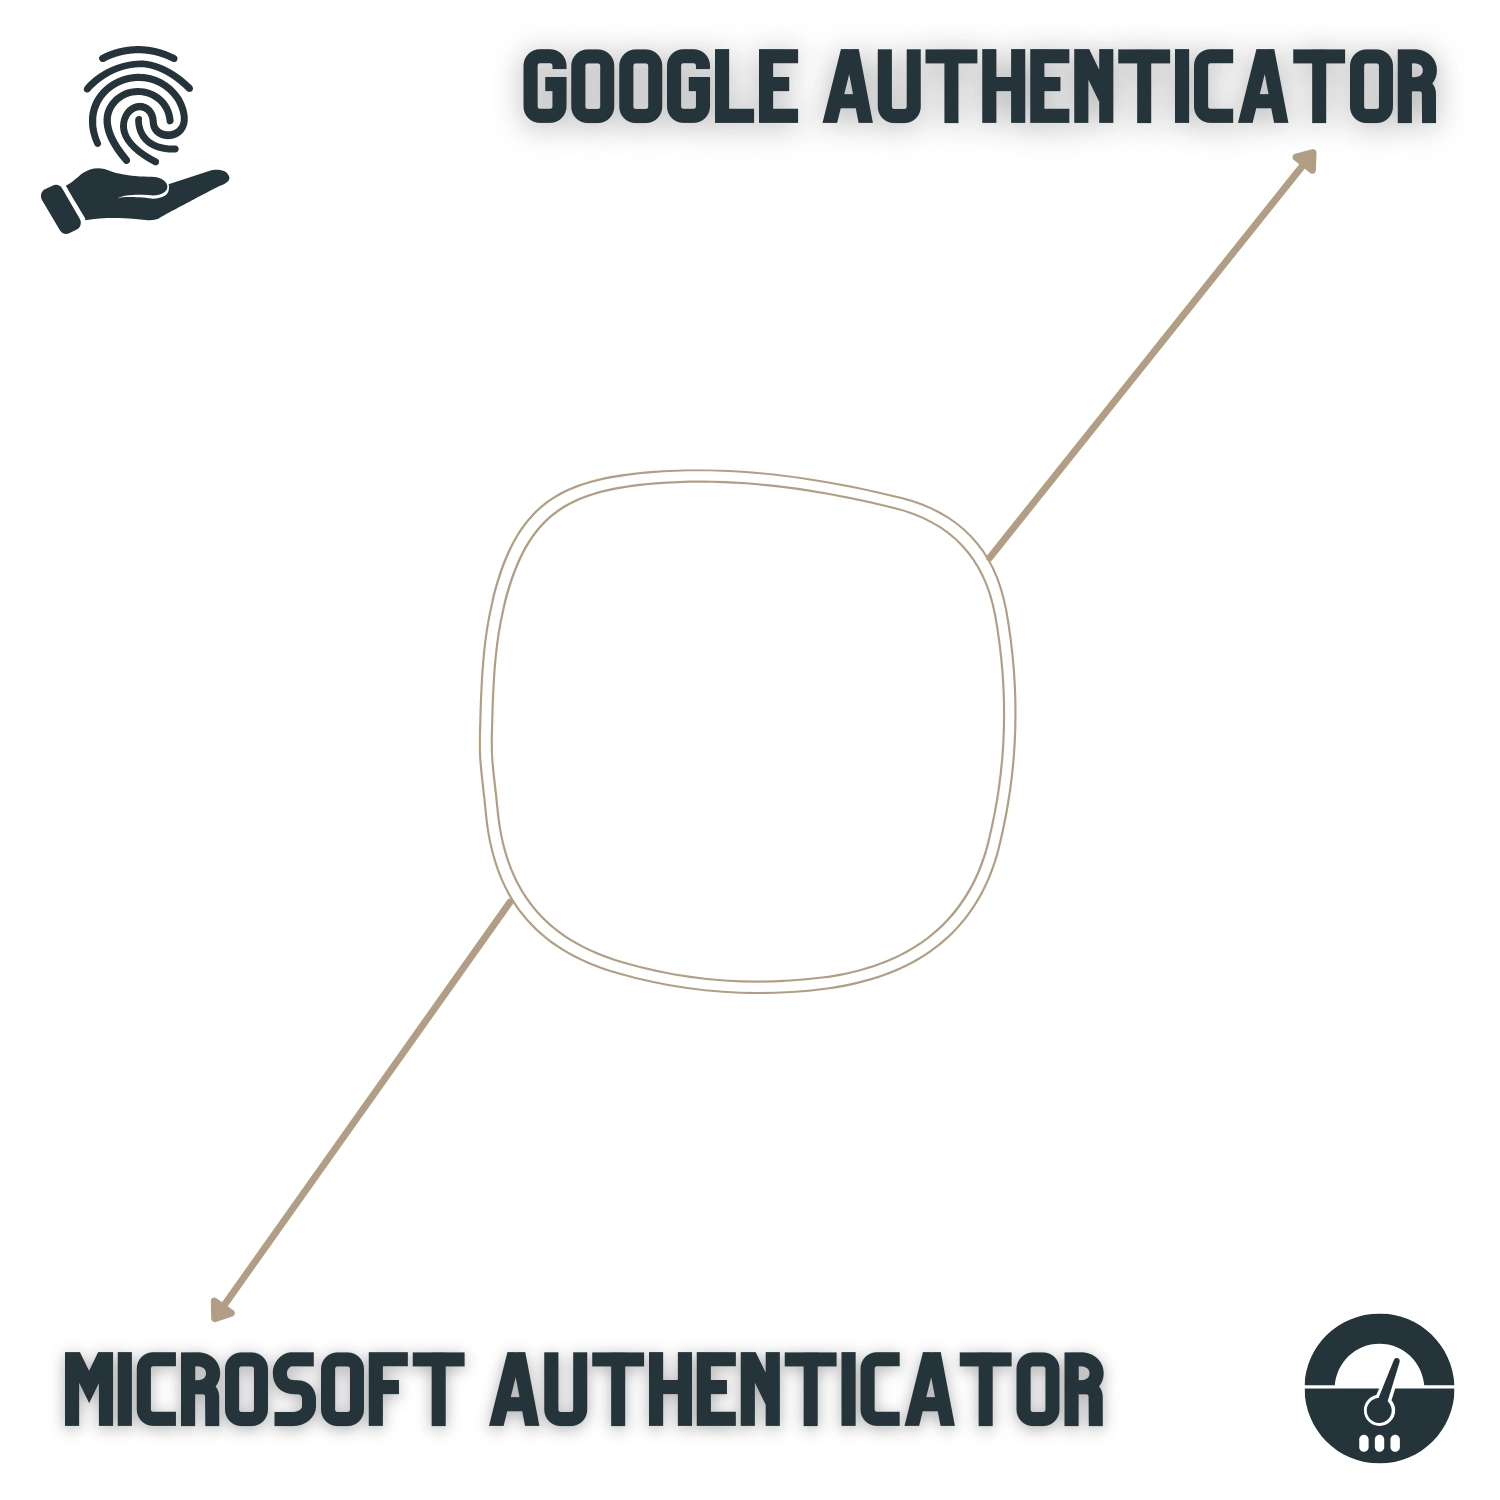 Google Authenticator vs Microsoft Authenticator